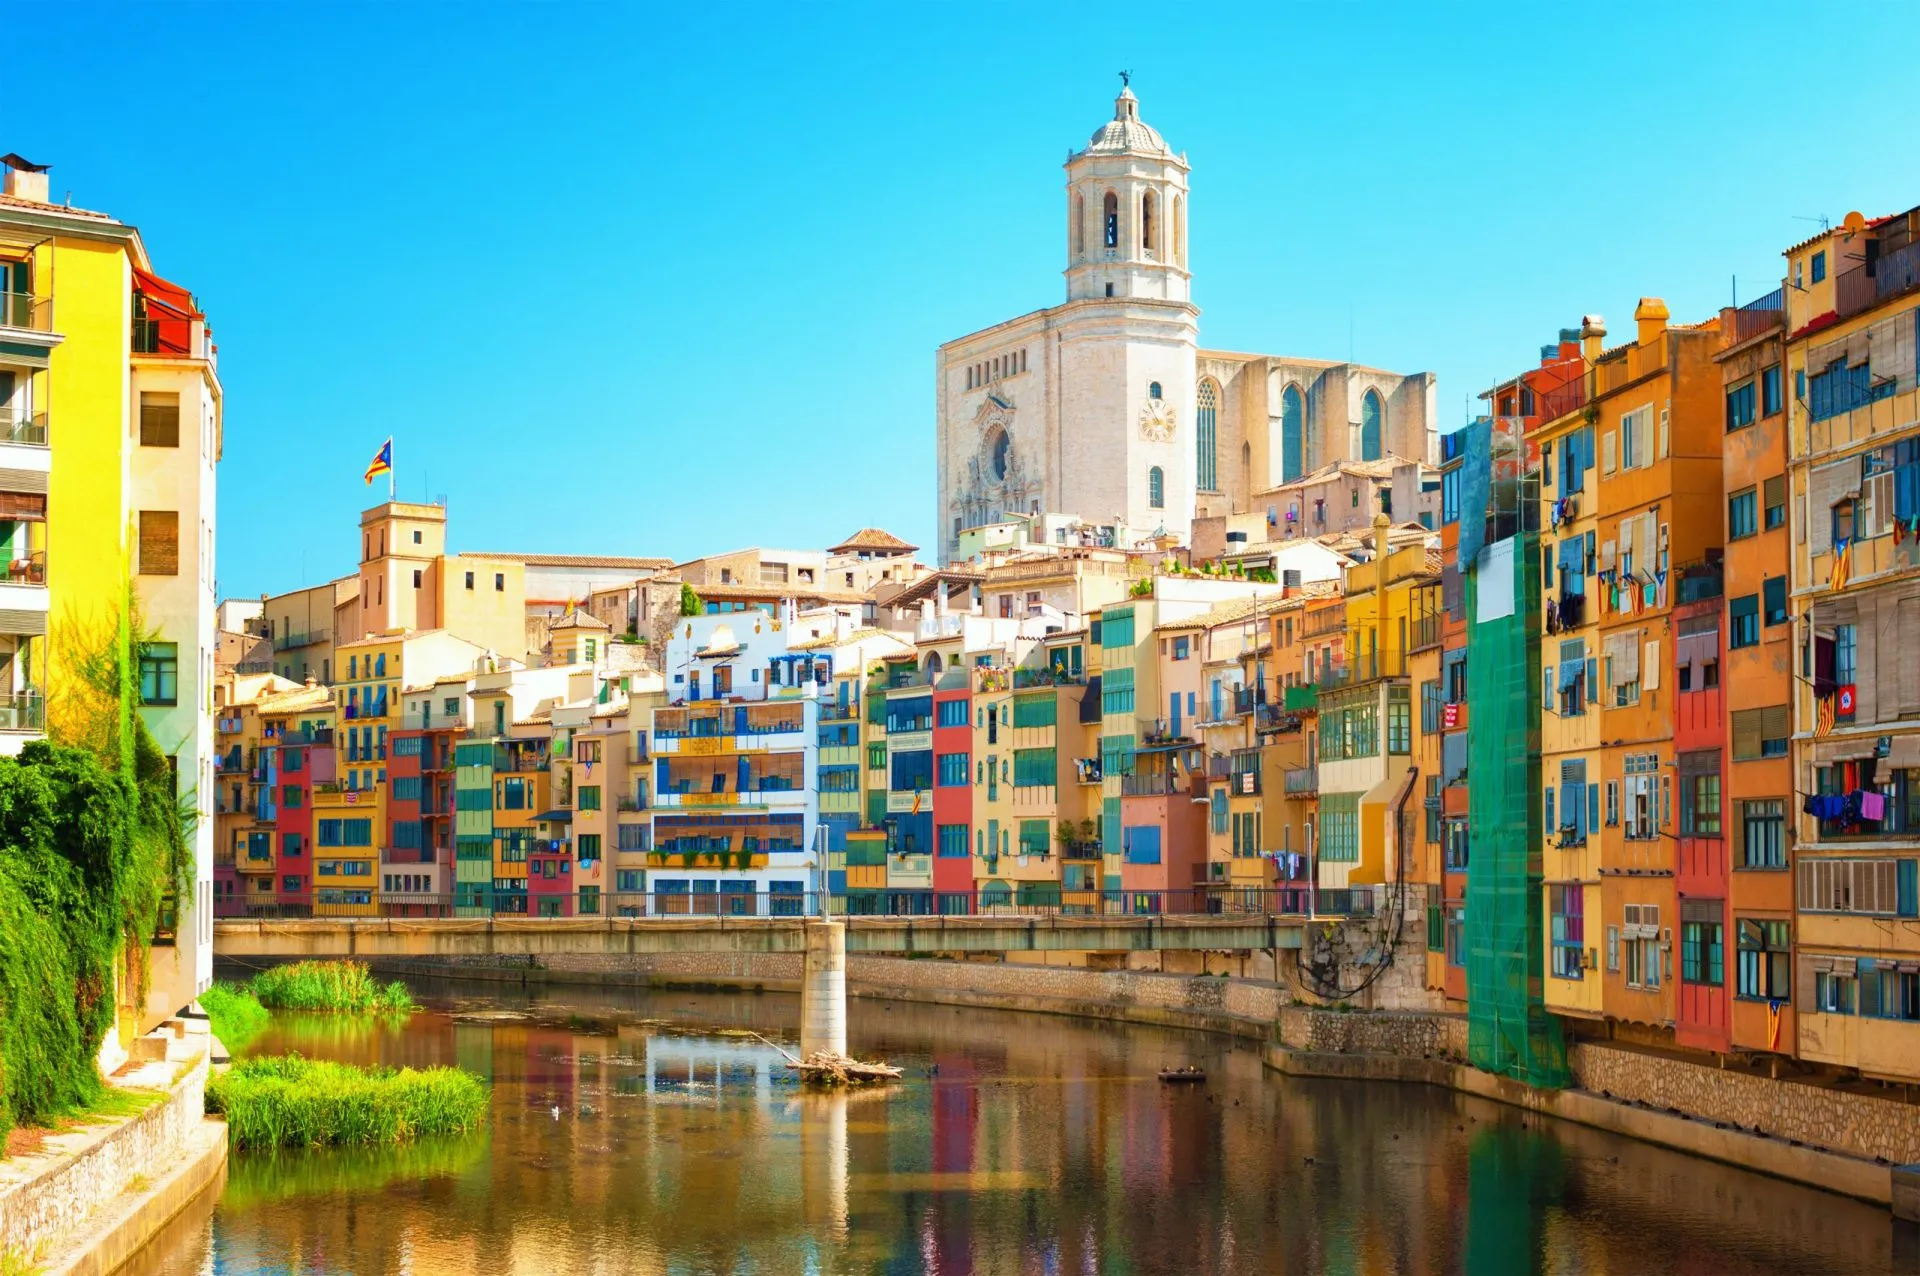 Case colorate sul fiume Onyar a Girona, Catalogna, Spagna